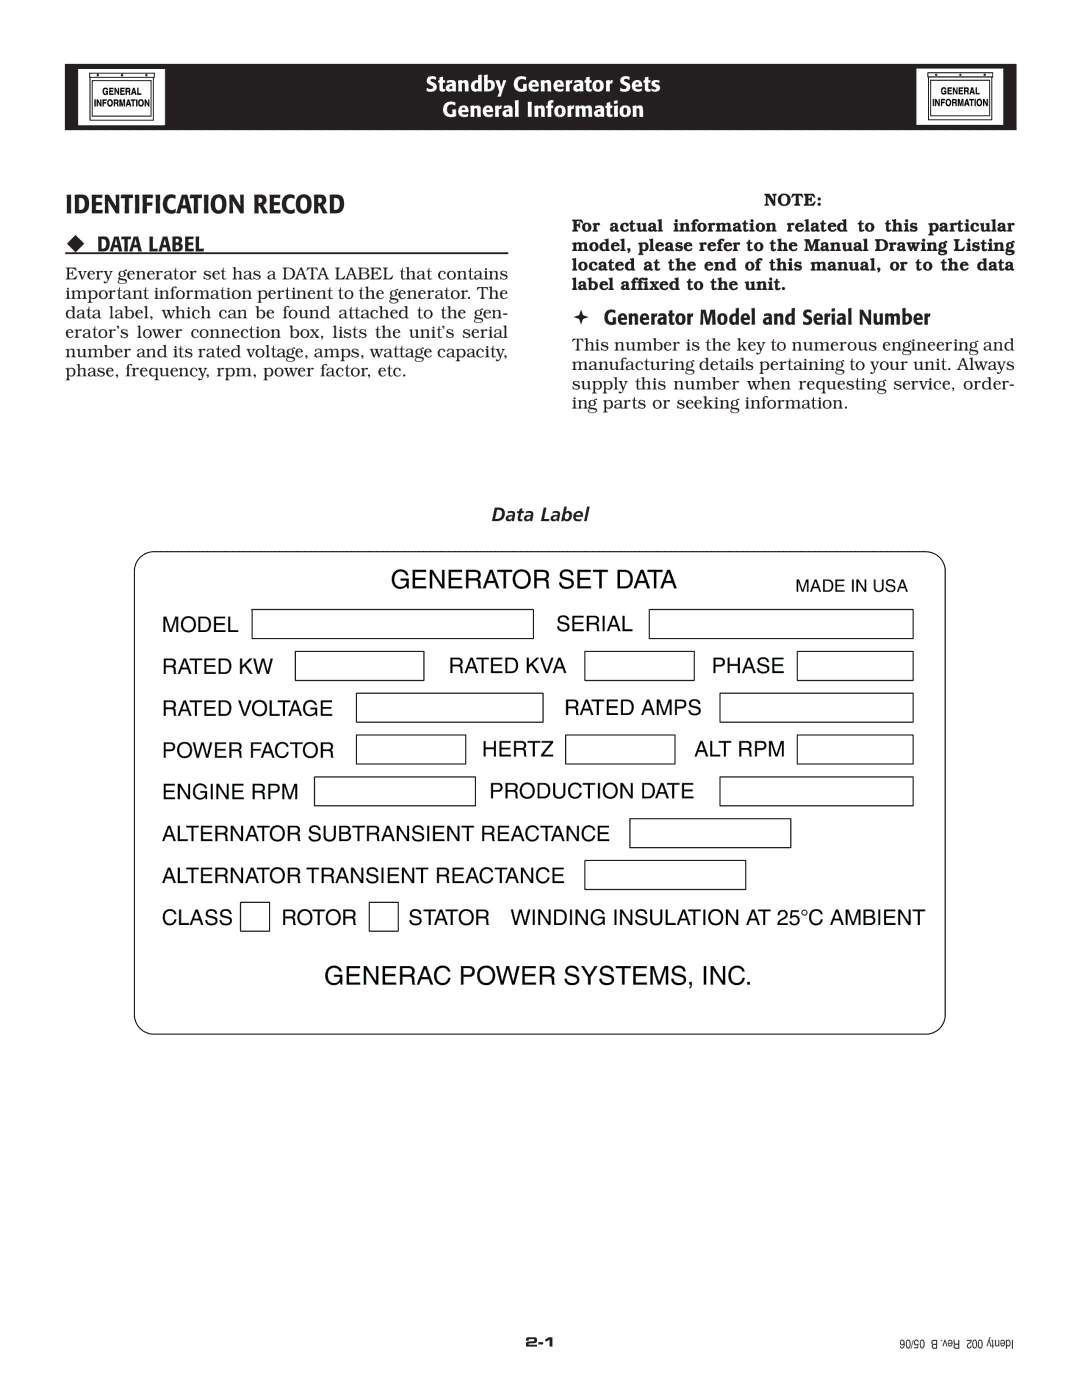 Siemens SG035 owner manual Identification Record, ‹ Data Label 